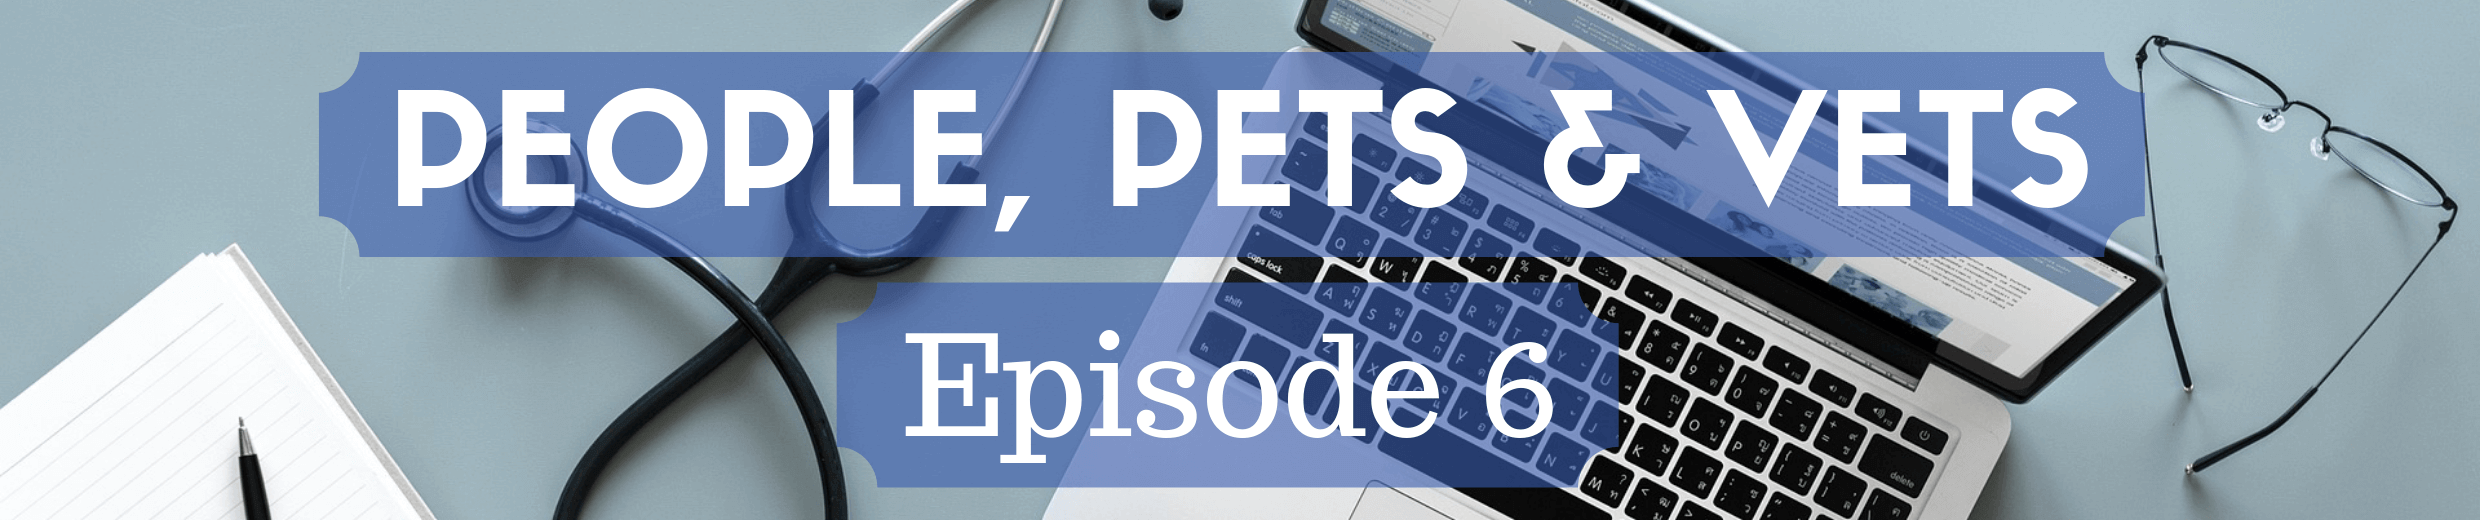 People, Pets & Vets: Episode 6